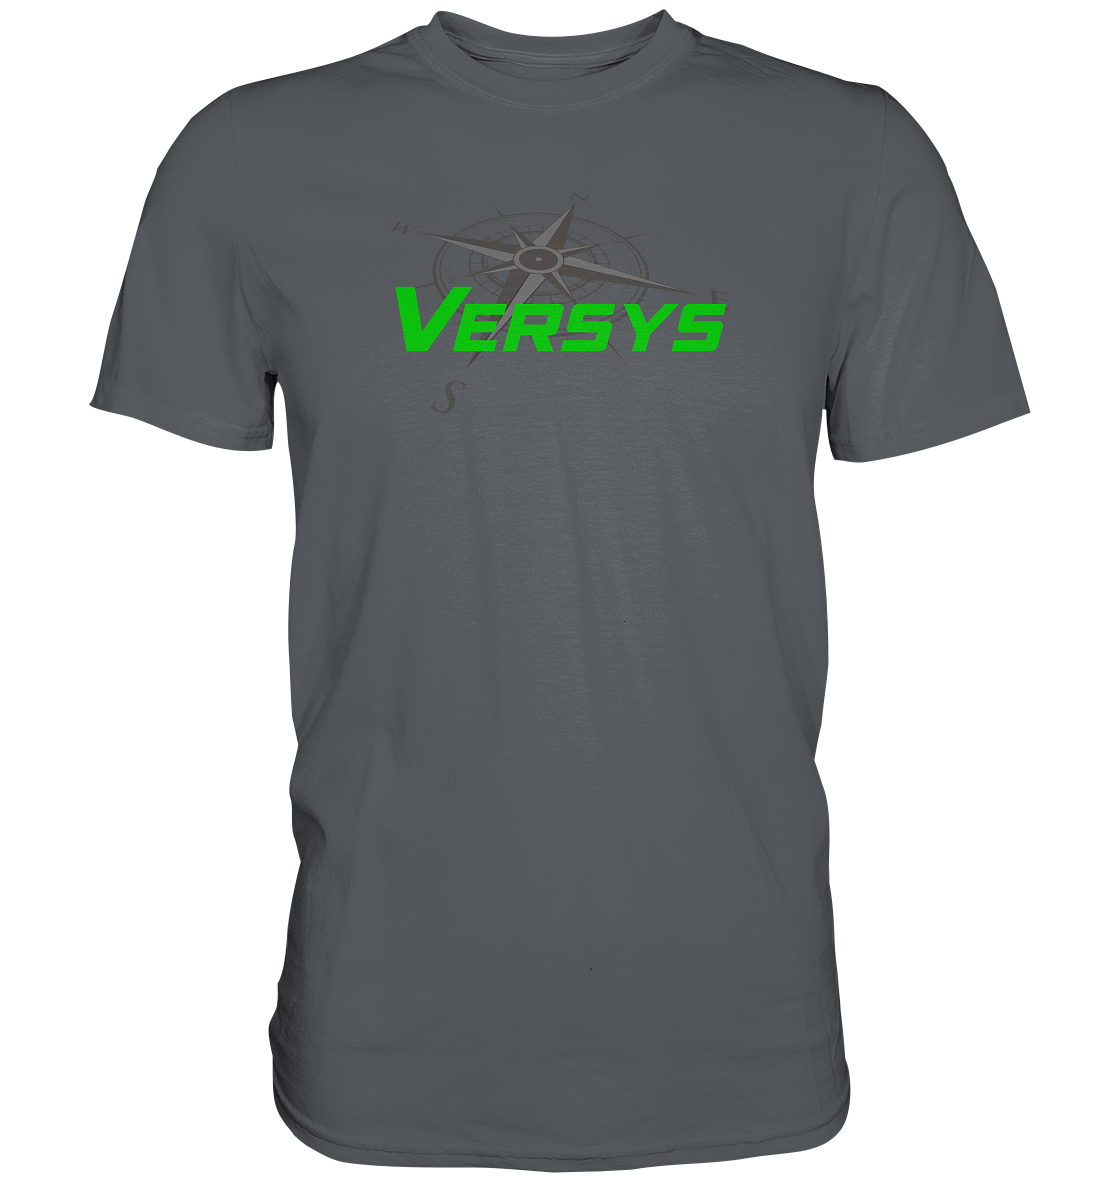 Versys mit Kompass - dunkle shirts - Premium unisex Shirt